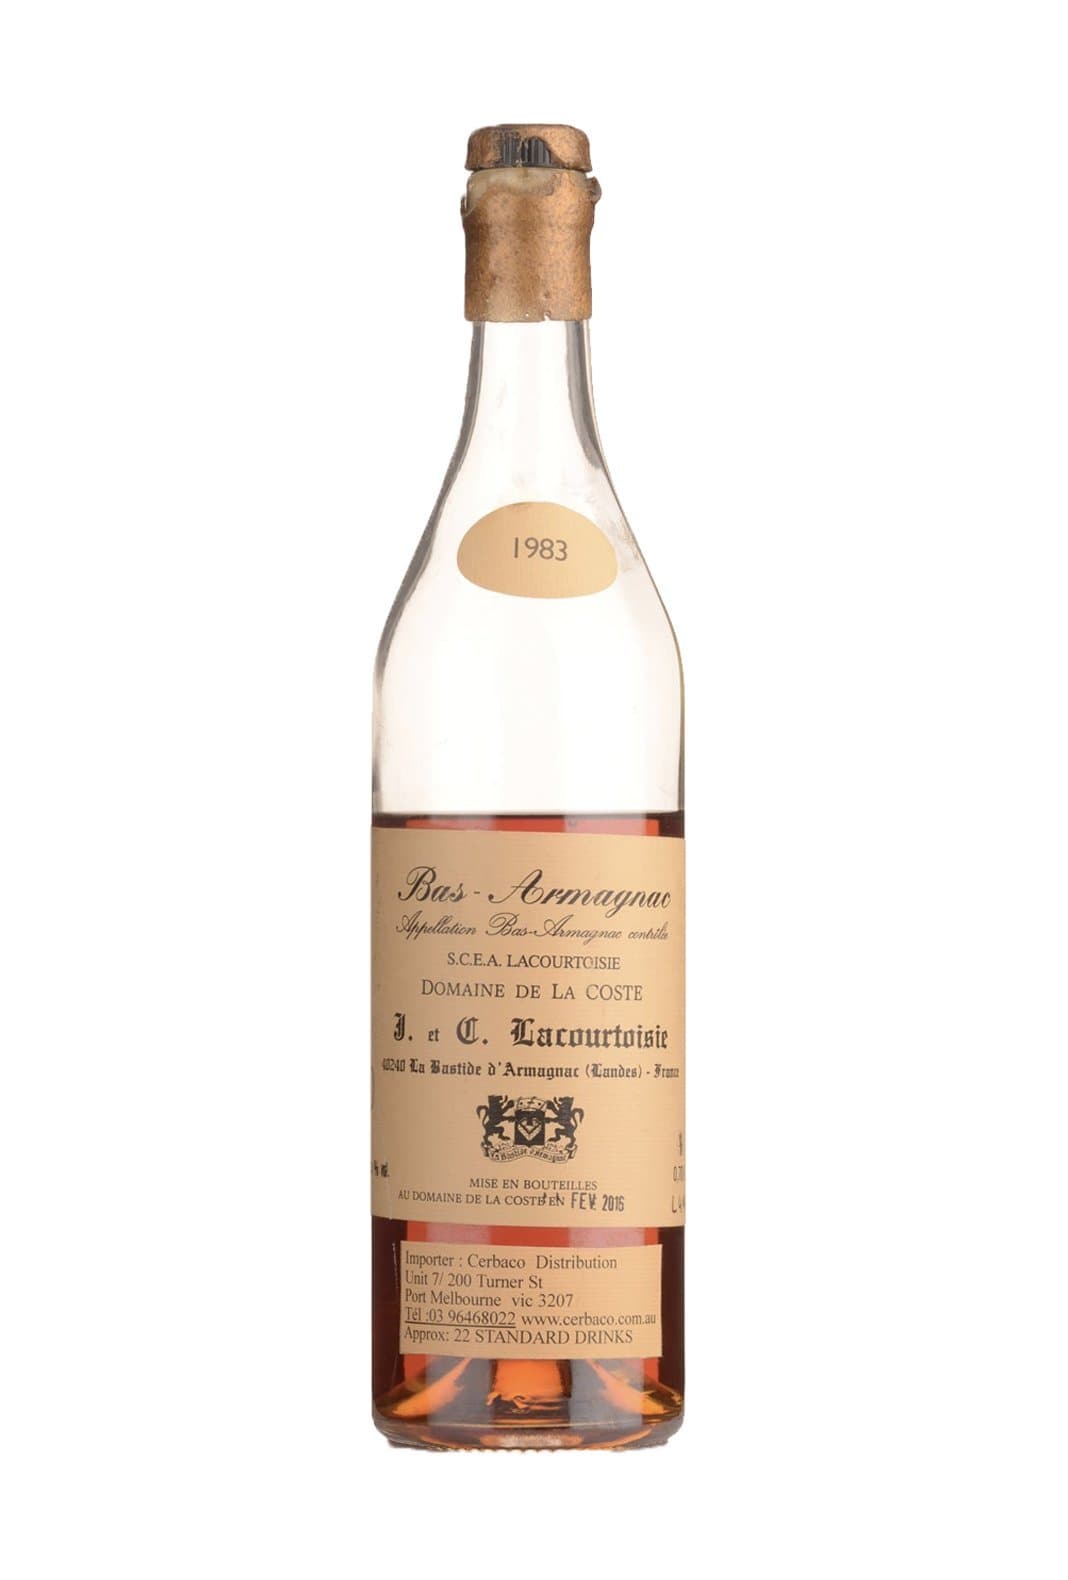 Lacourtoisie Bas Armagnac 1983 40% 700ml | Brandy | Shop online at Spirits of France